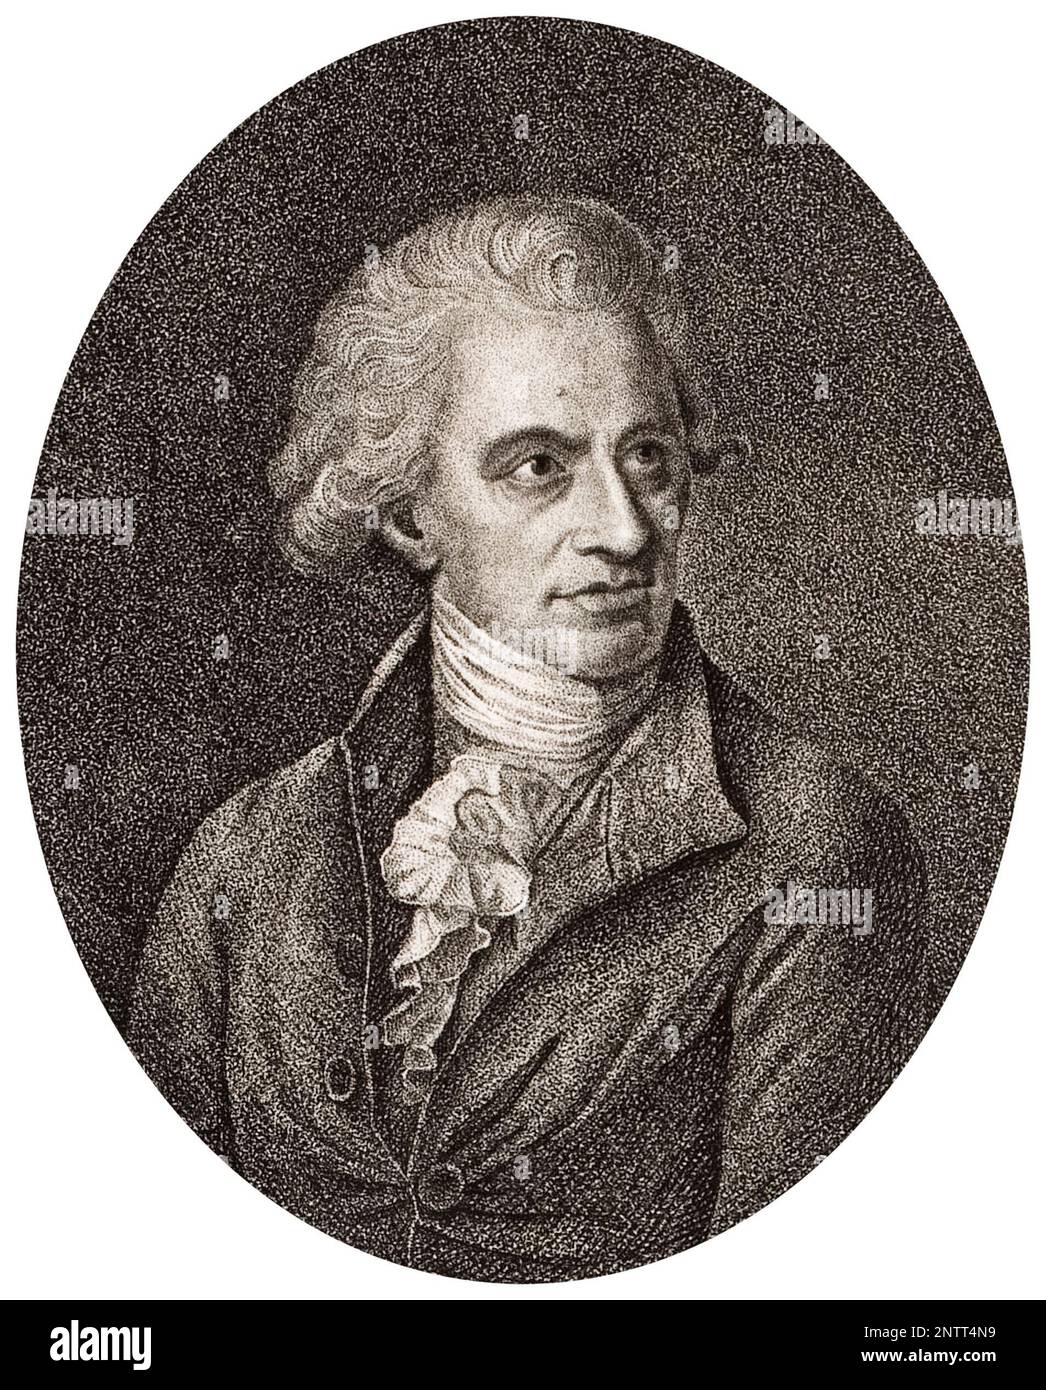 Sir William Herschel (1738-1822), German-born British Astronomer and Composer, portrait engraving by Johann Christian Ernst Müller, 1776-1824 Stock Photo